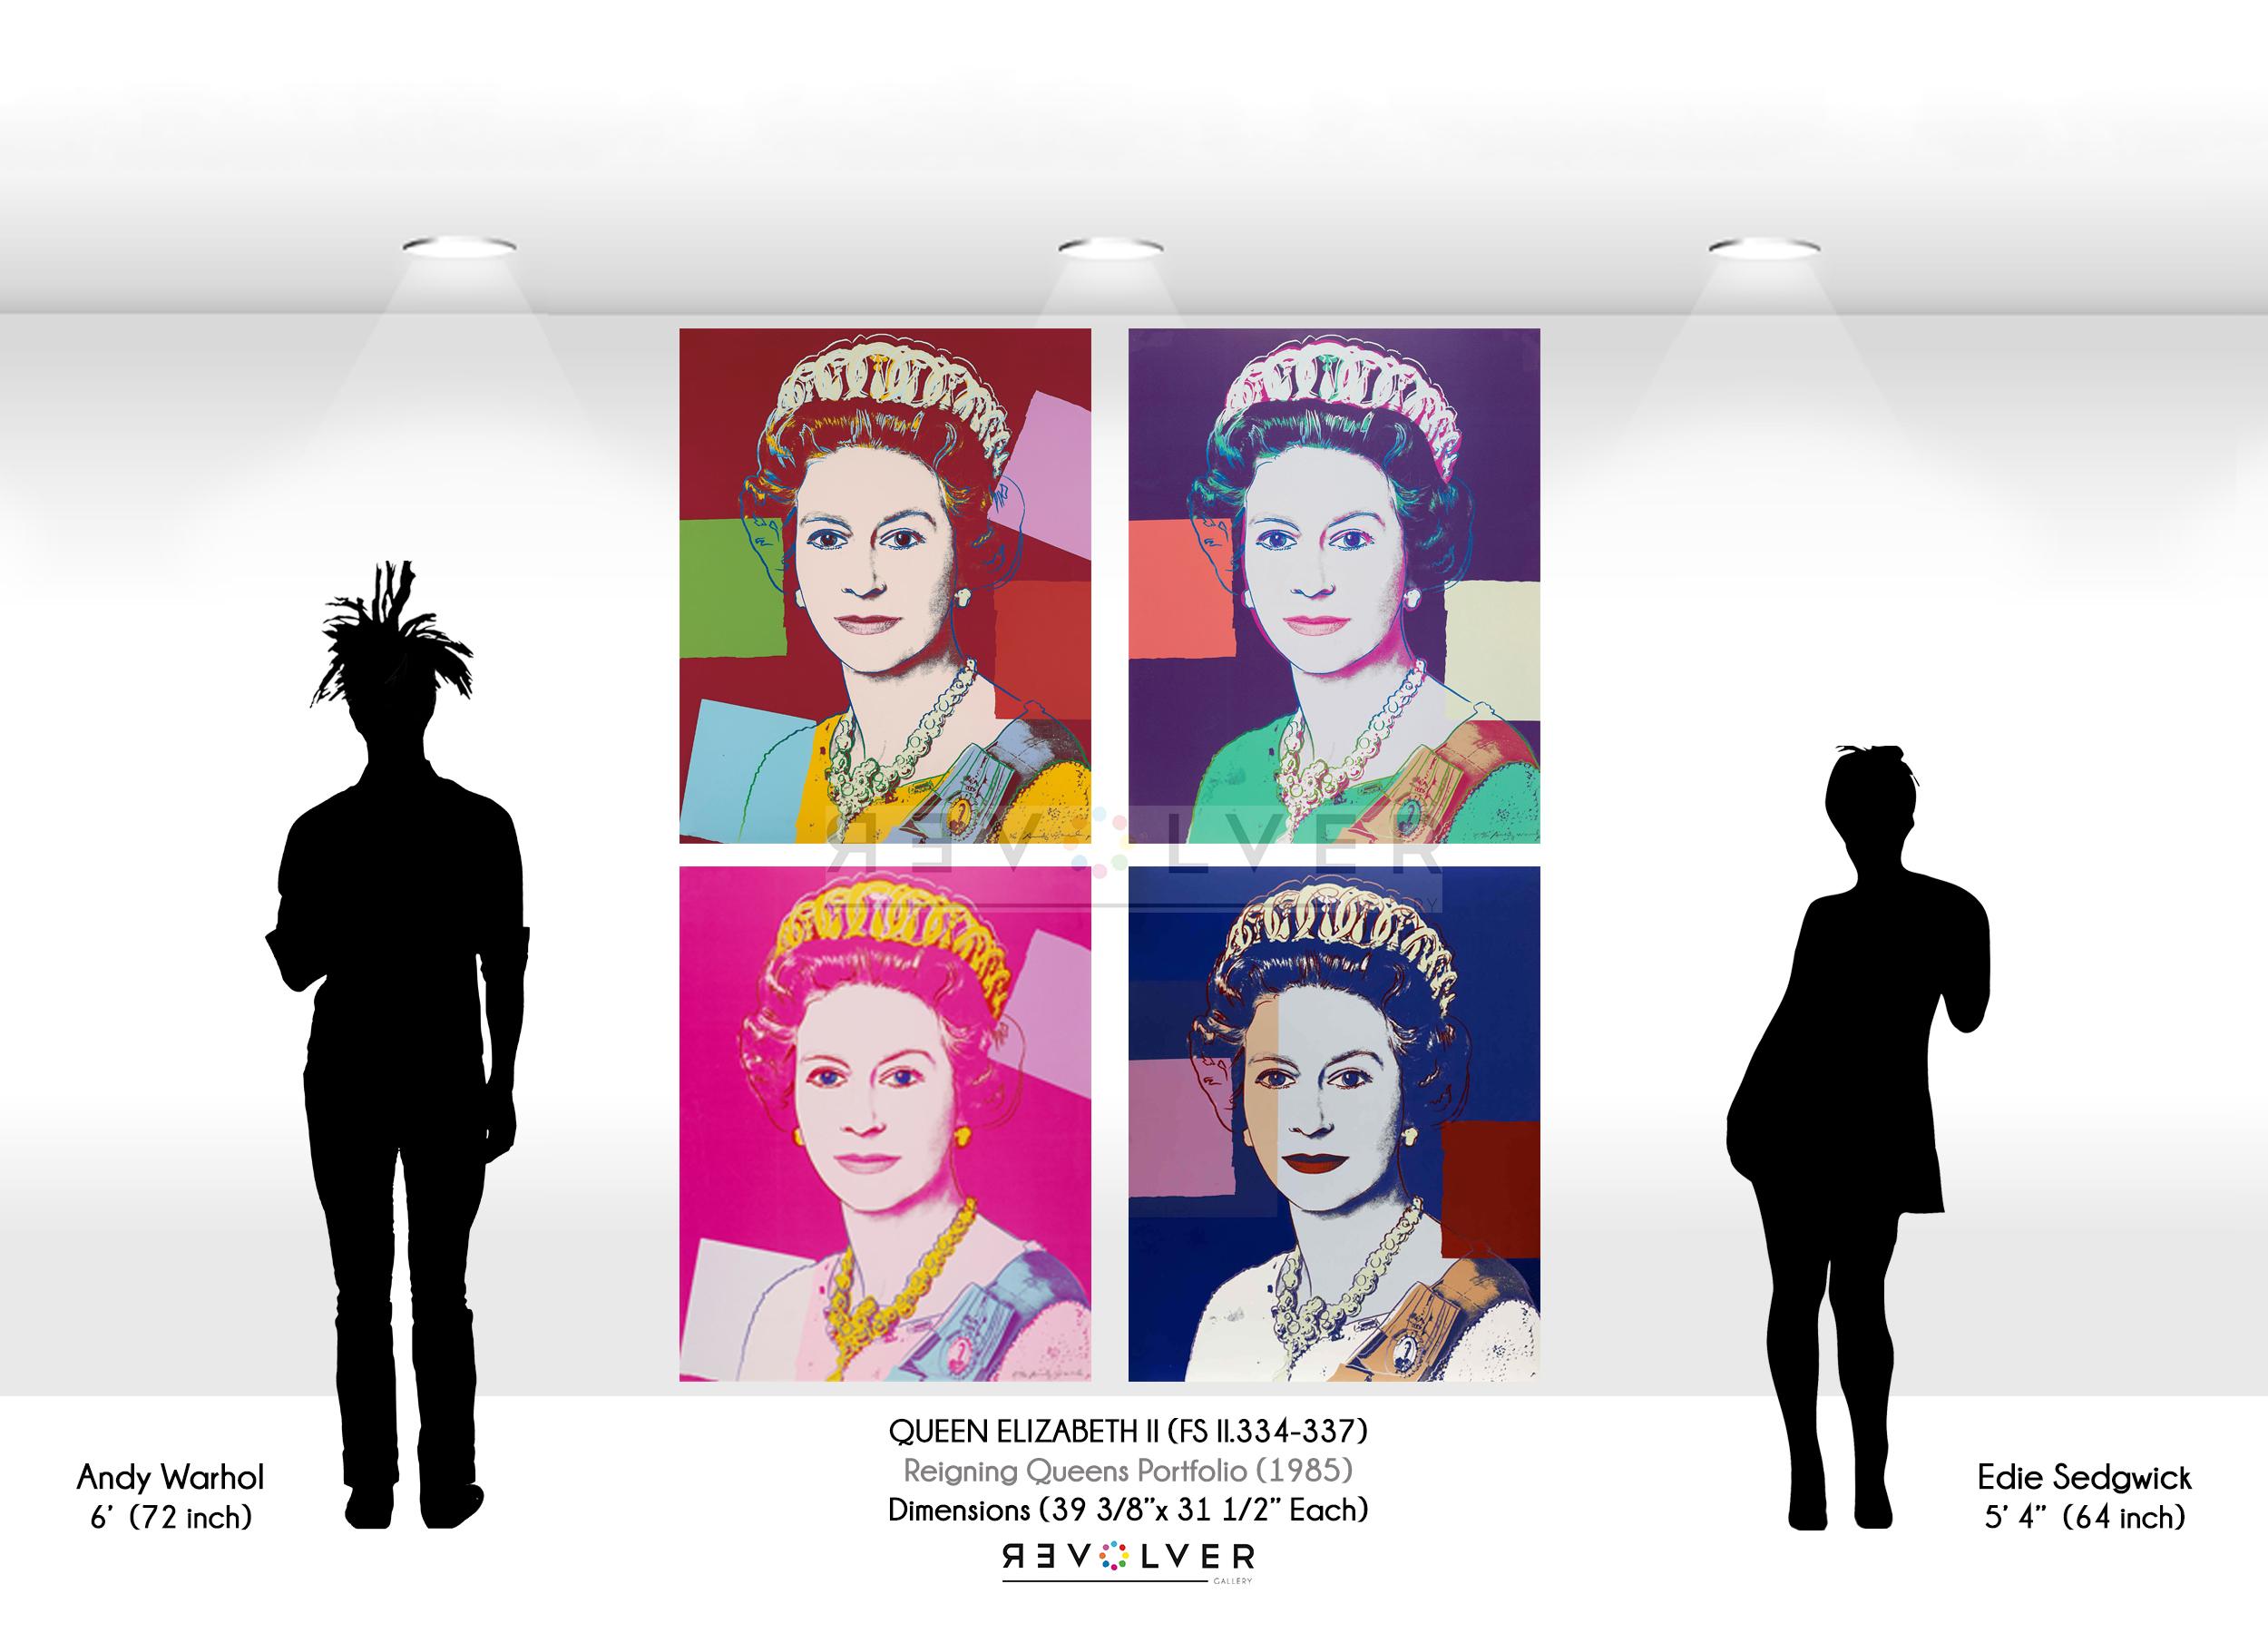 Queen Elizabeth II Of The United Kingdom Complete Portfolio (Reigning Queens) For Sale 2